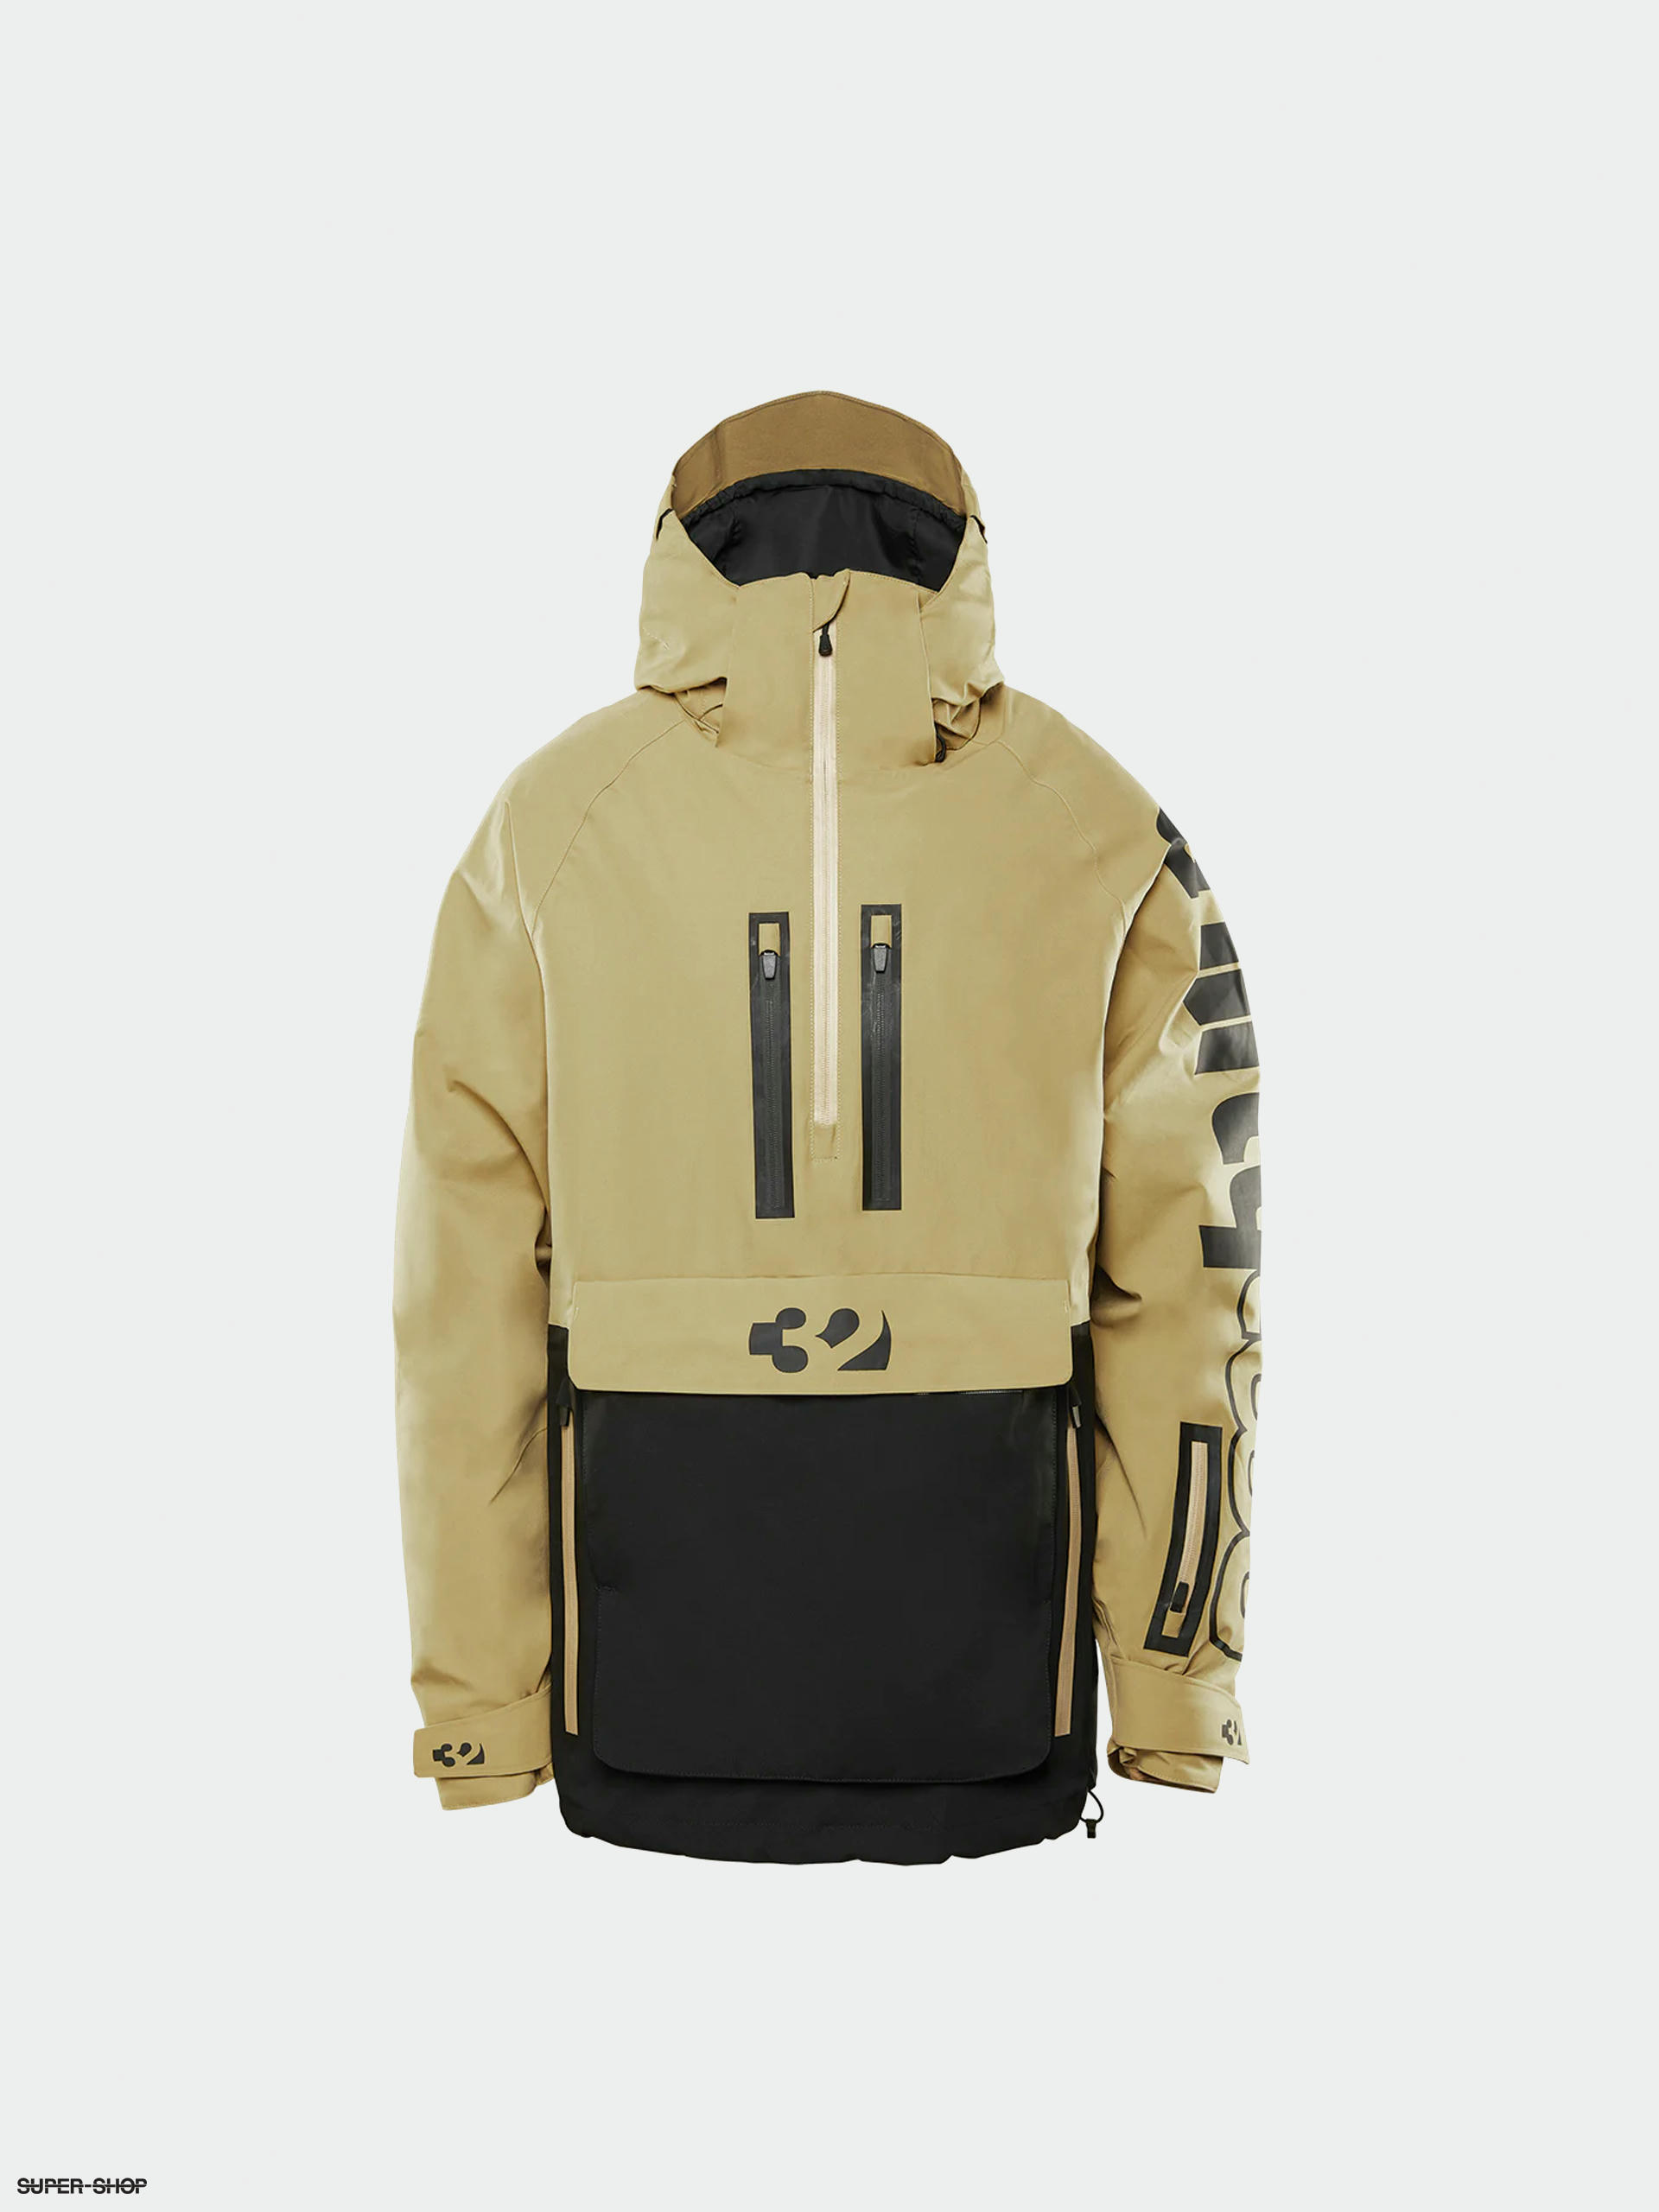 ThirtyTwo Lashed Insulated Snowboard jacket (black/camo)